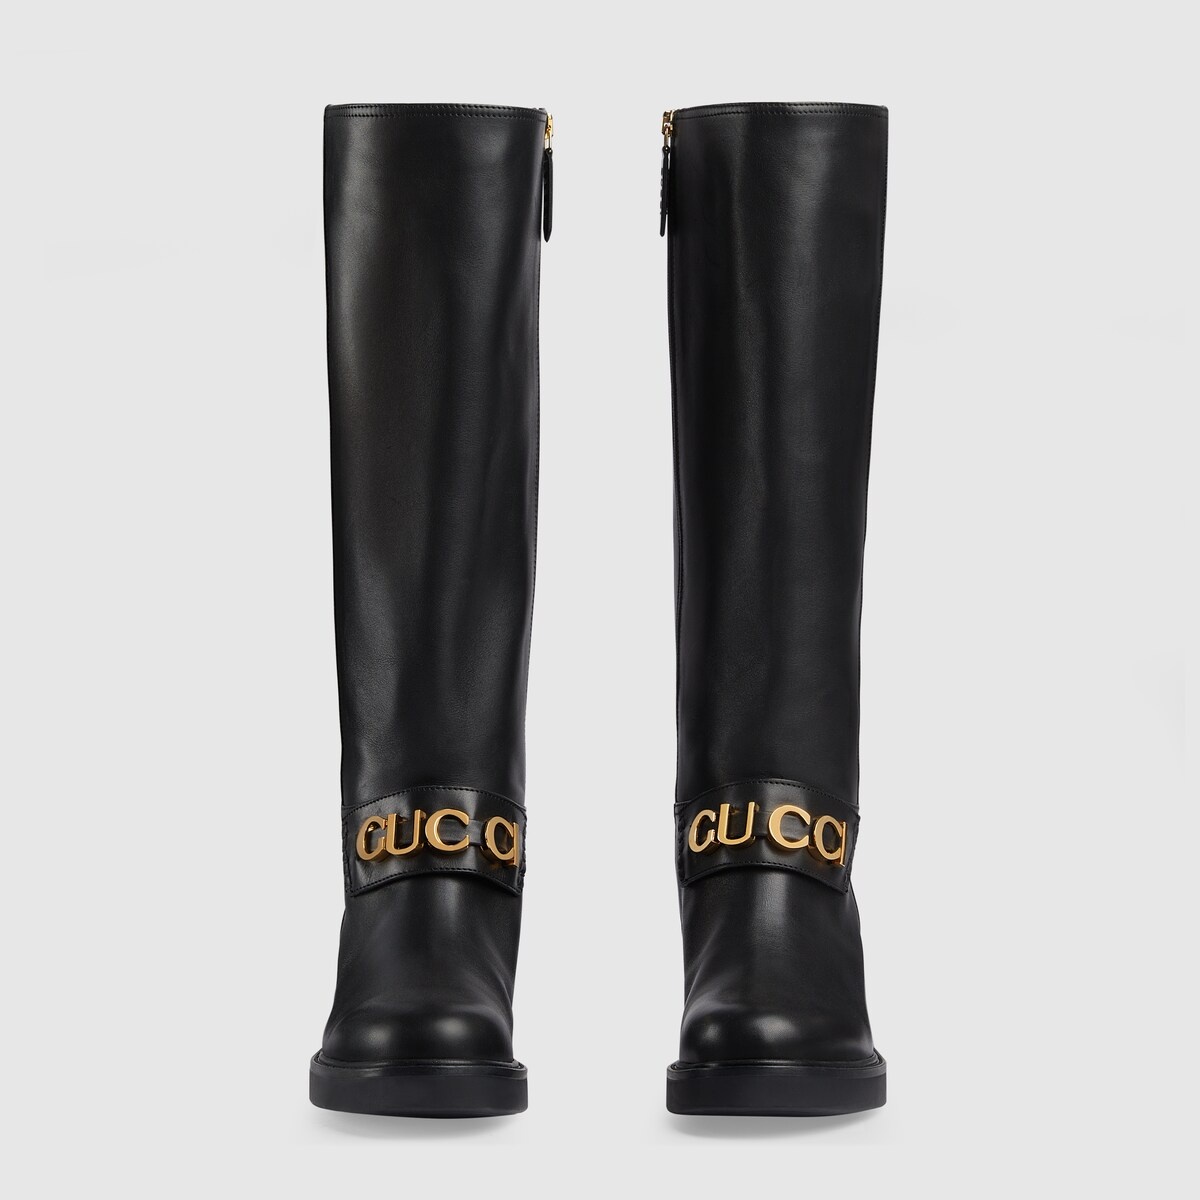 Women's Gucci boot - 4